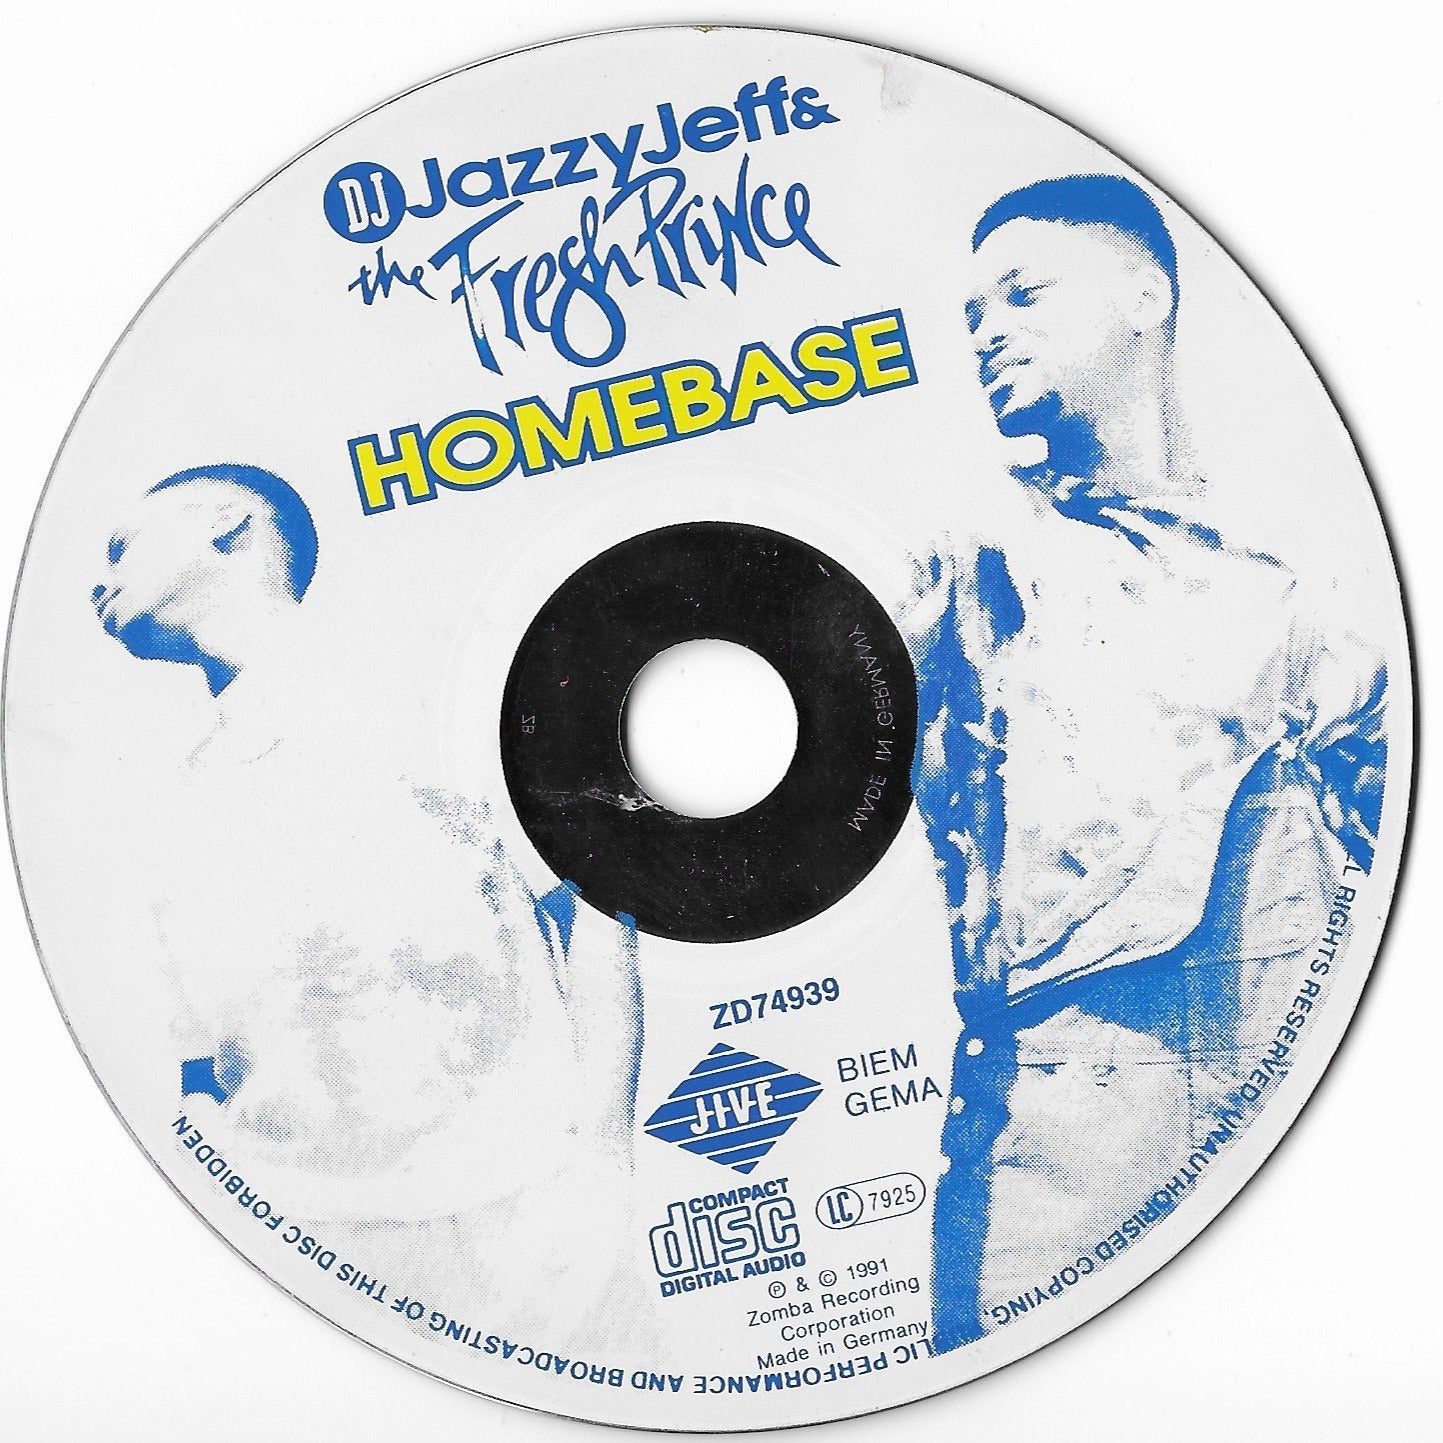 DJ JAZZY JEFF & THE FRESH PRINCE -Homebase